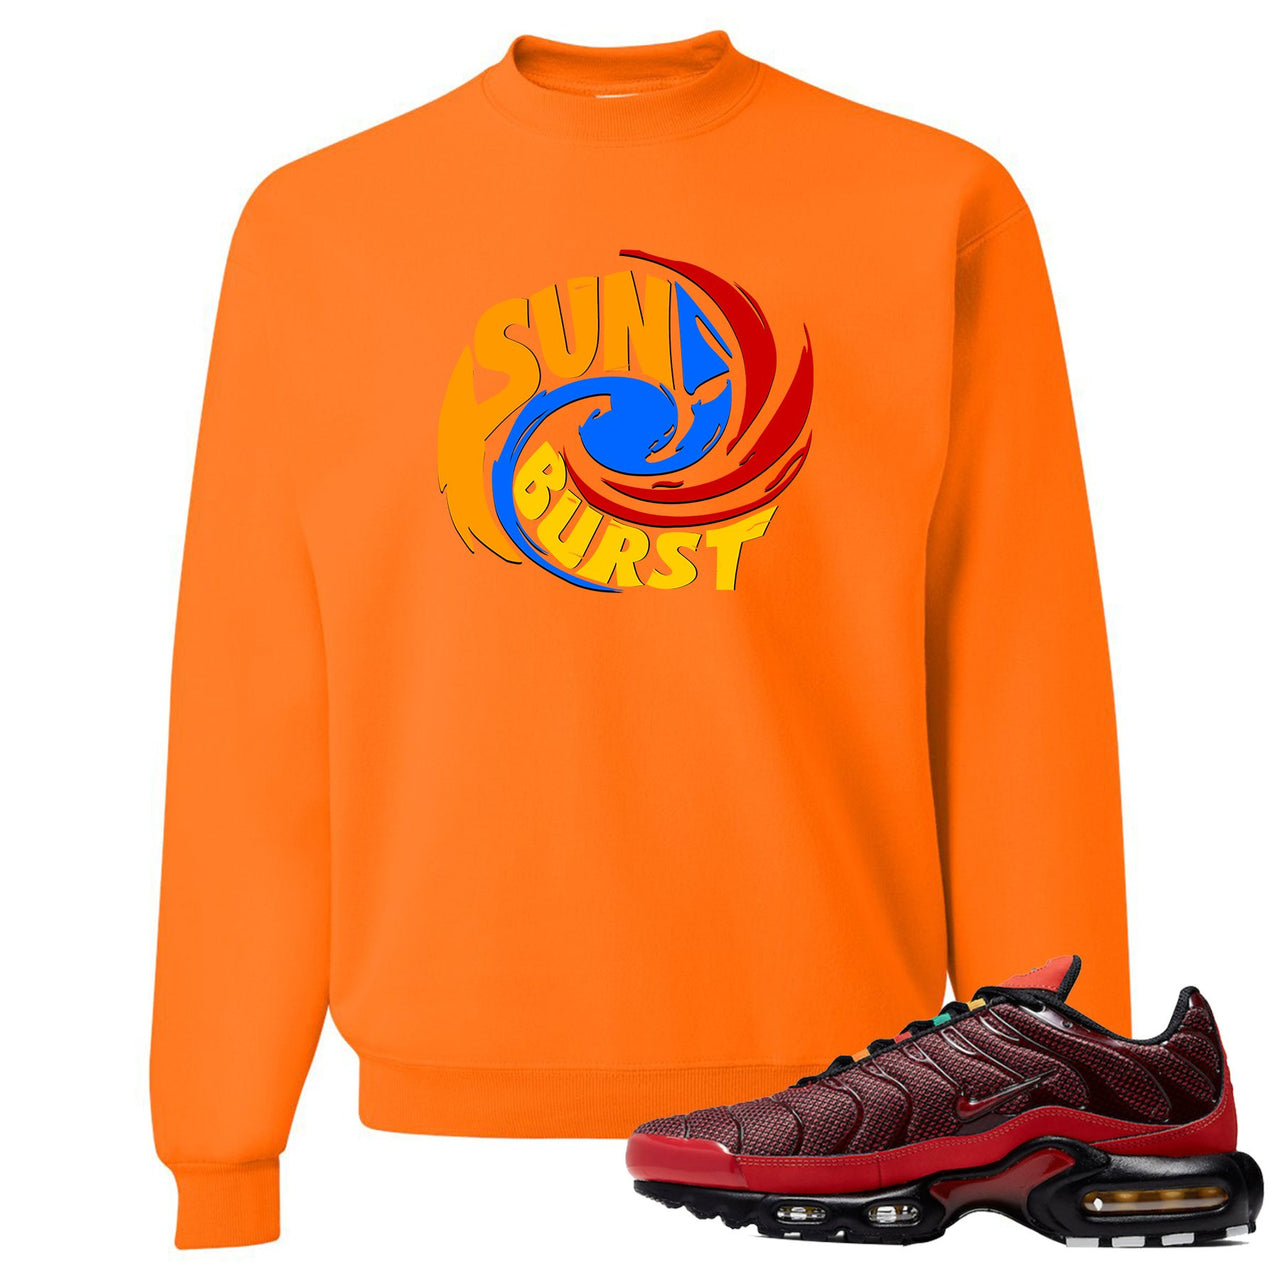 printed on the front of the air max plus sunburst sneaker matching safety orange crewneck sweatshirt is the sunburst logo